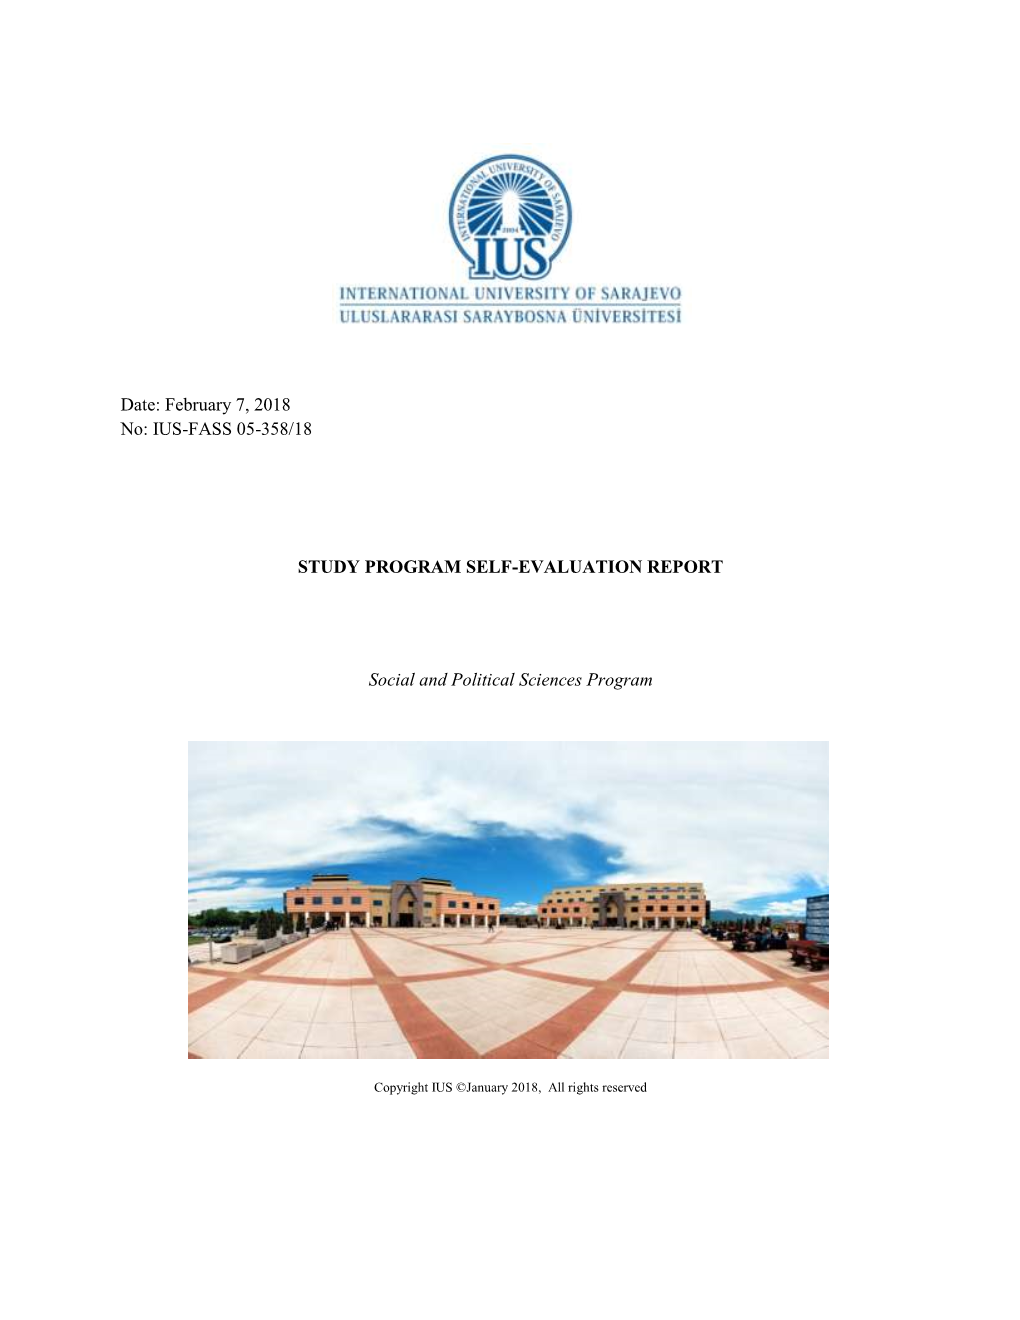 Appendix 11 Self-Evaluation Report for Study Program Social and Political Sciences